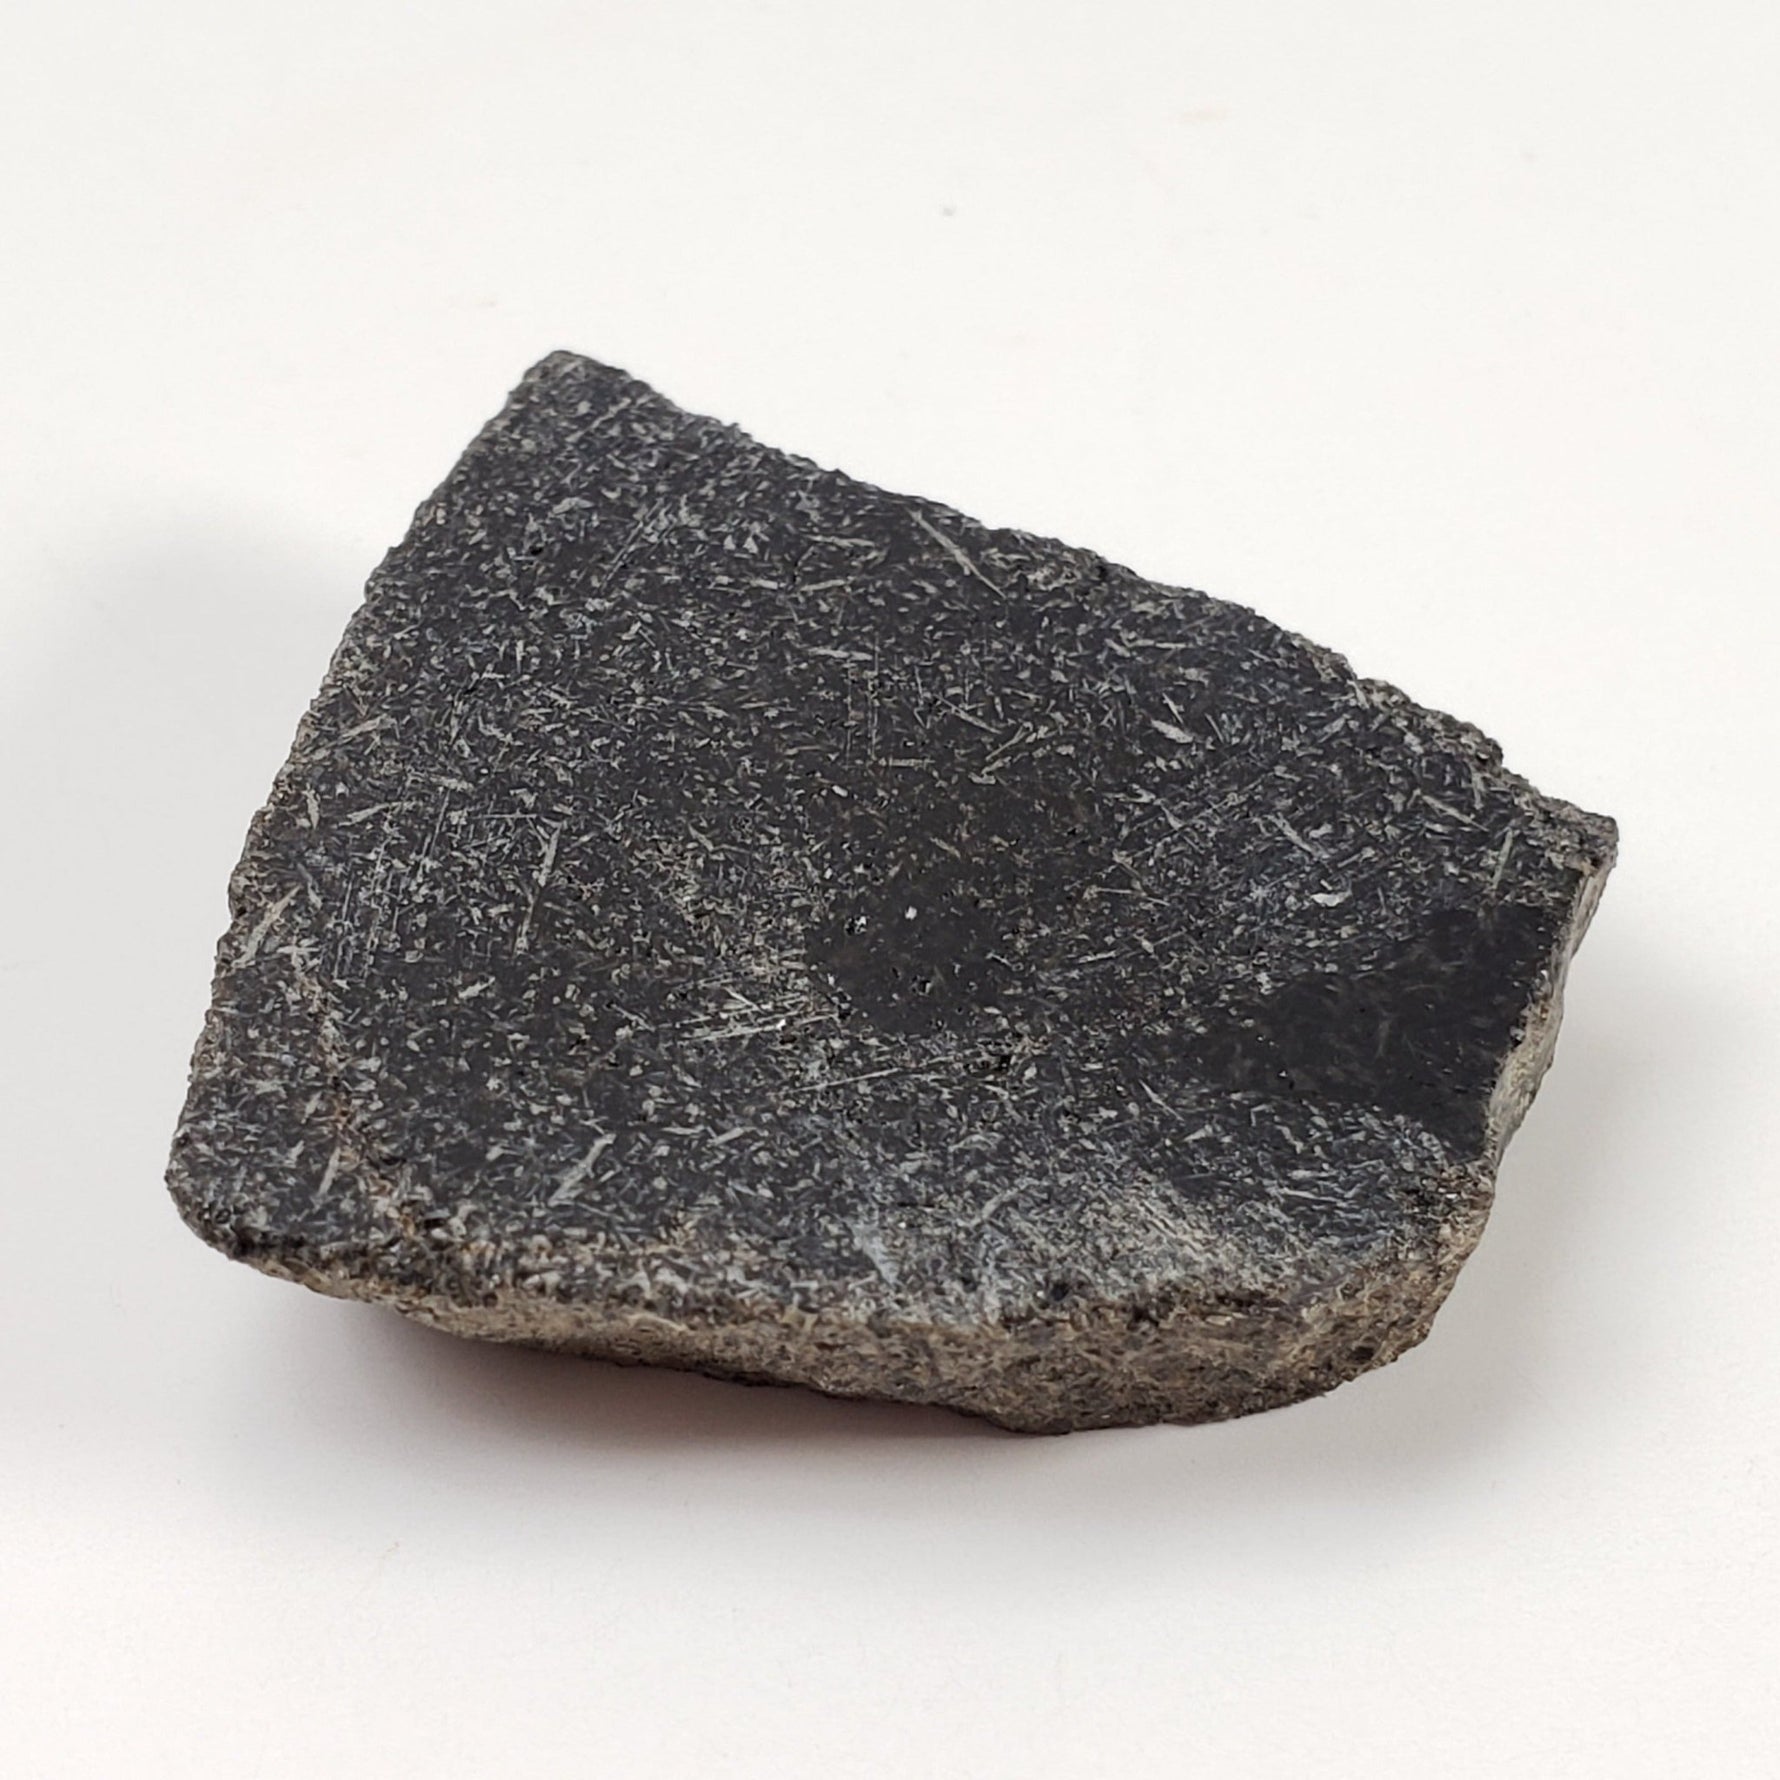 Dellenites Impact Melt Rock | 21.3 grams | HT Tagamite | Dellen Crater, Sweden